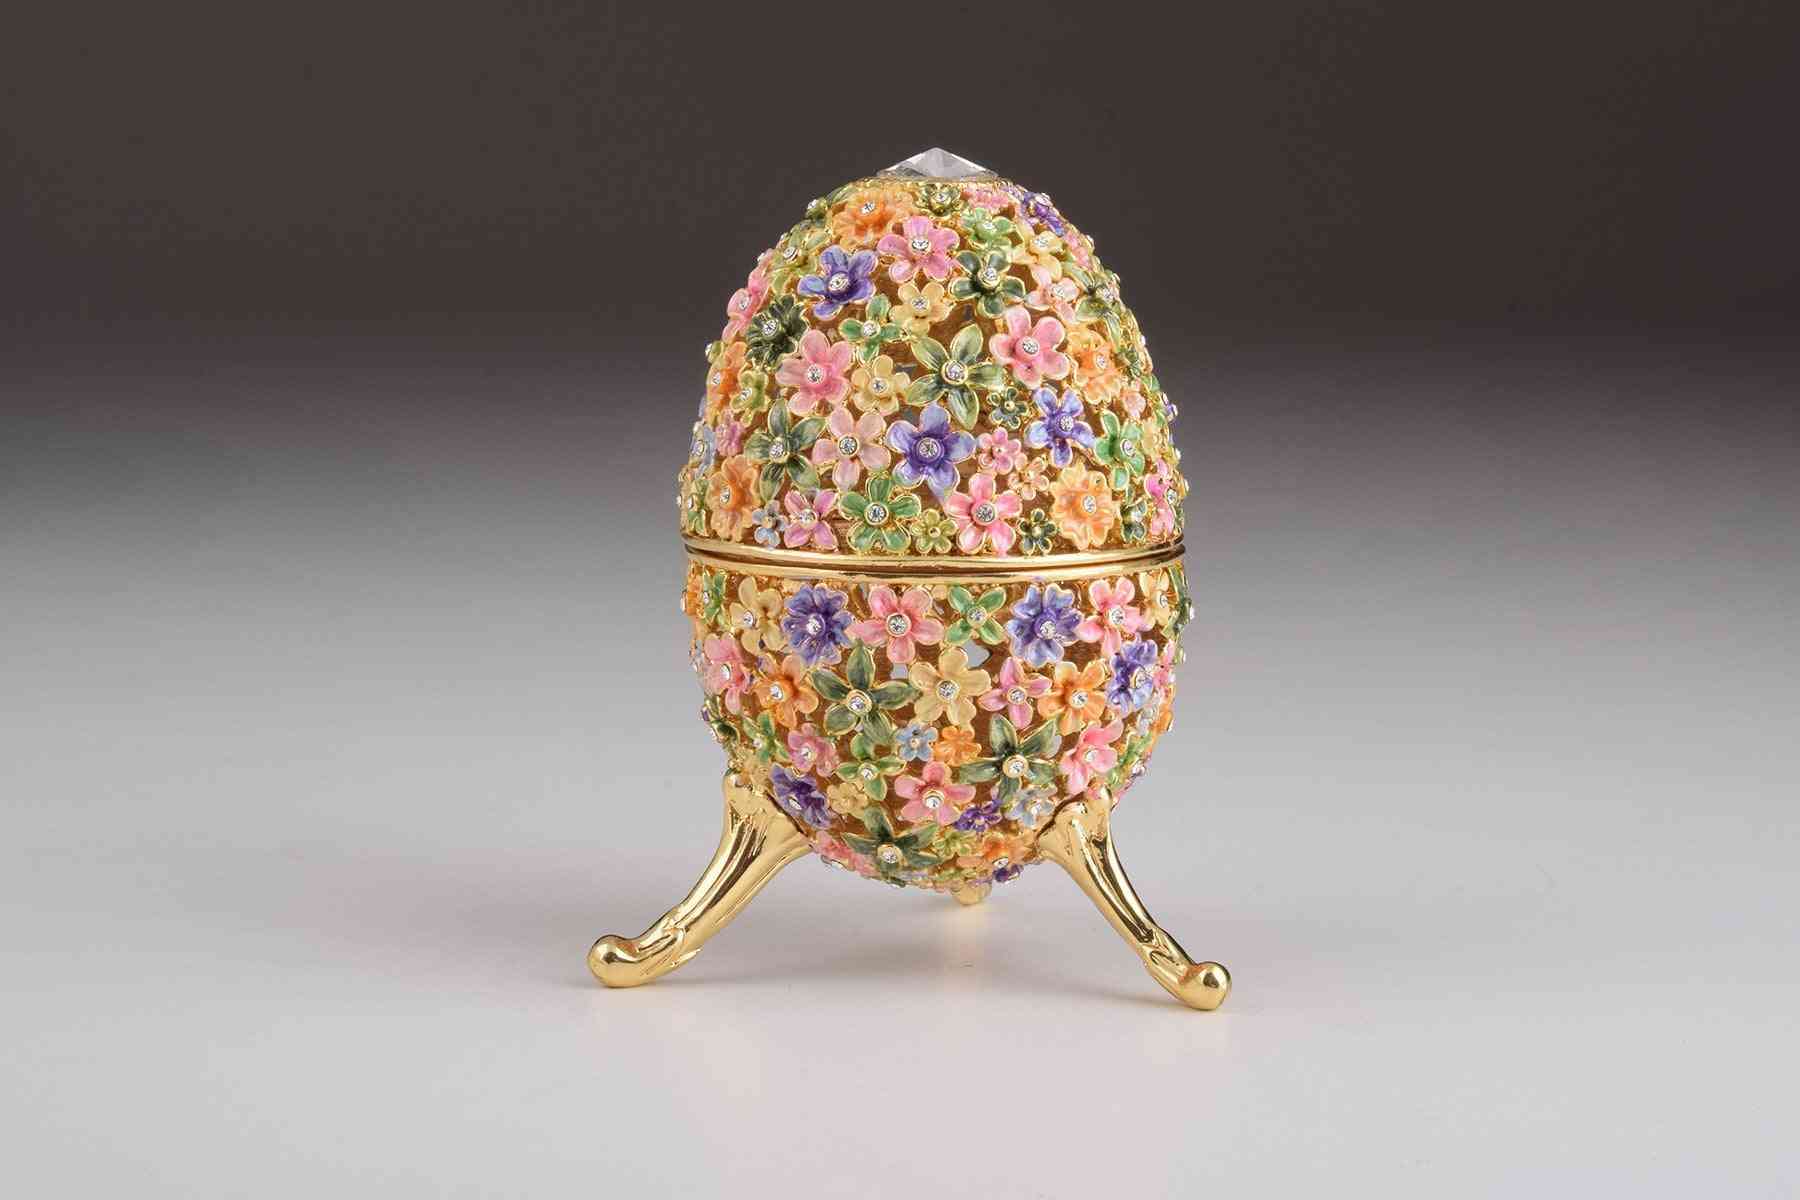 злато с цветни цветя великденско яйце - дрънкулка